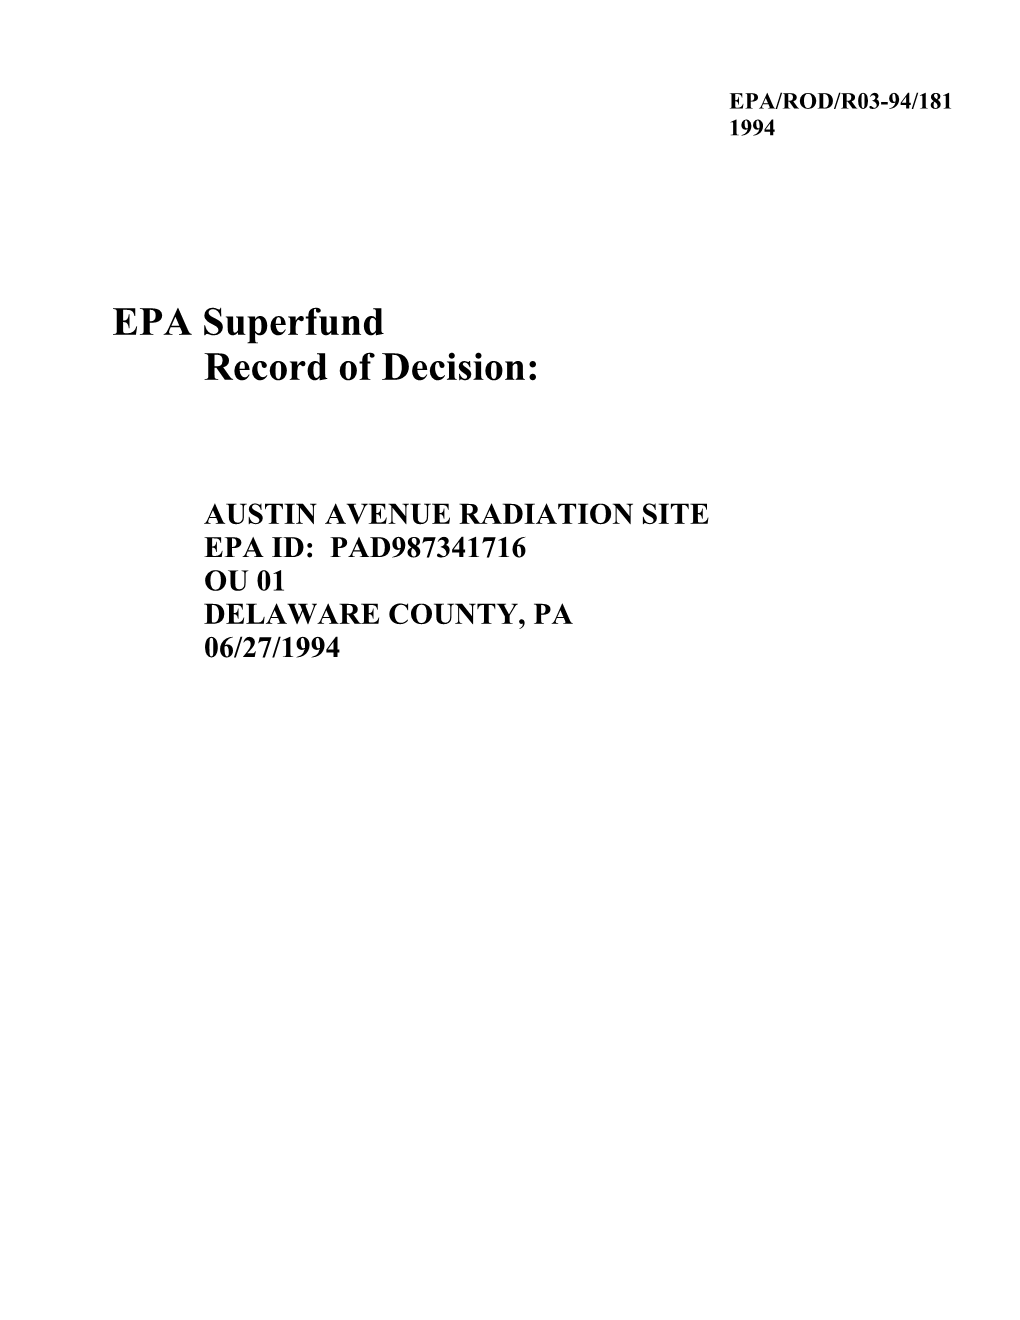 AUSTIN AVENUE RADIATION SITE EPA ID: PAD987341716 OU 01 DELAWARE COUNTY, PA 06/27/1994 Text